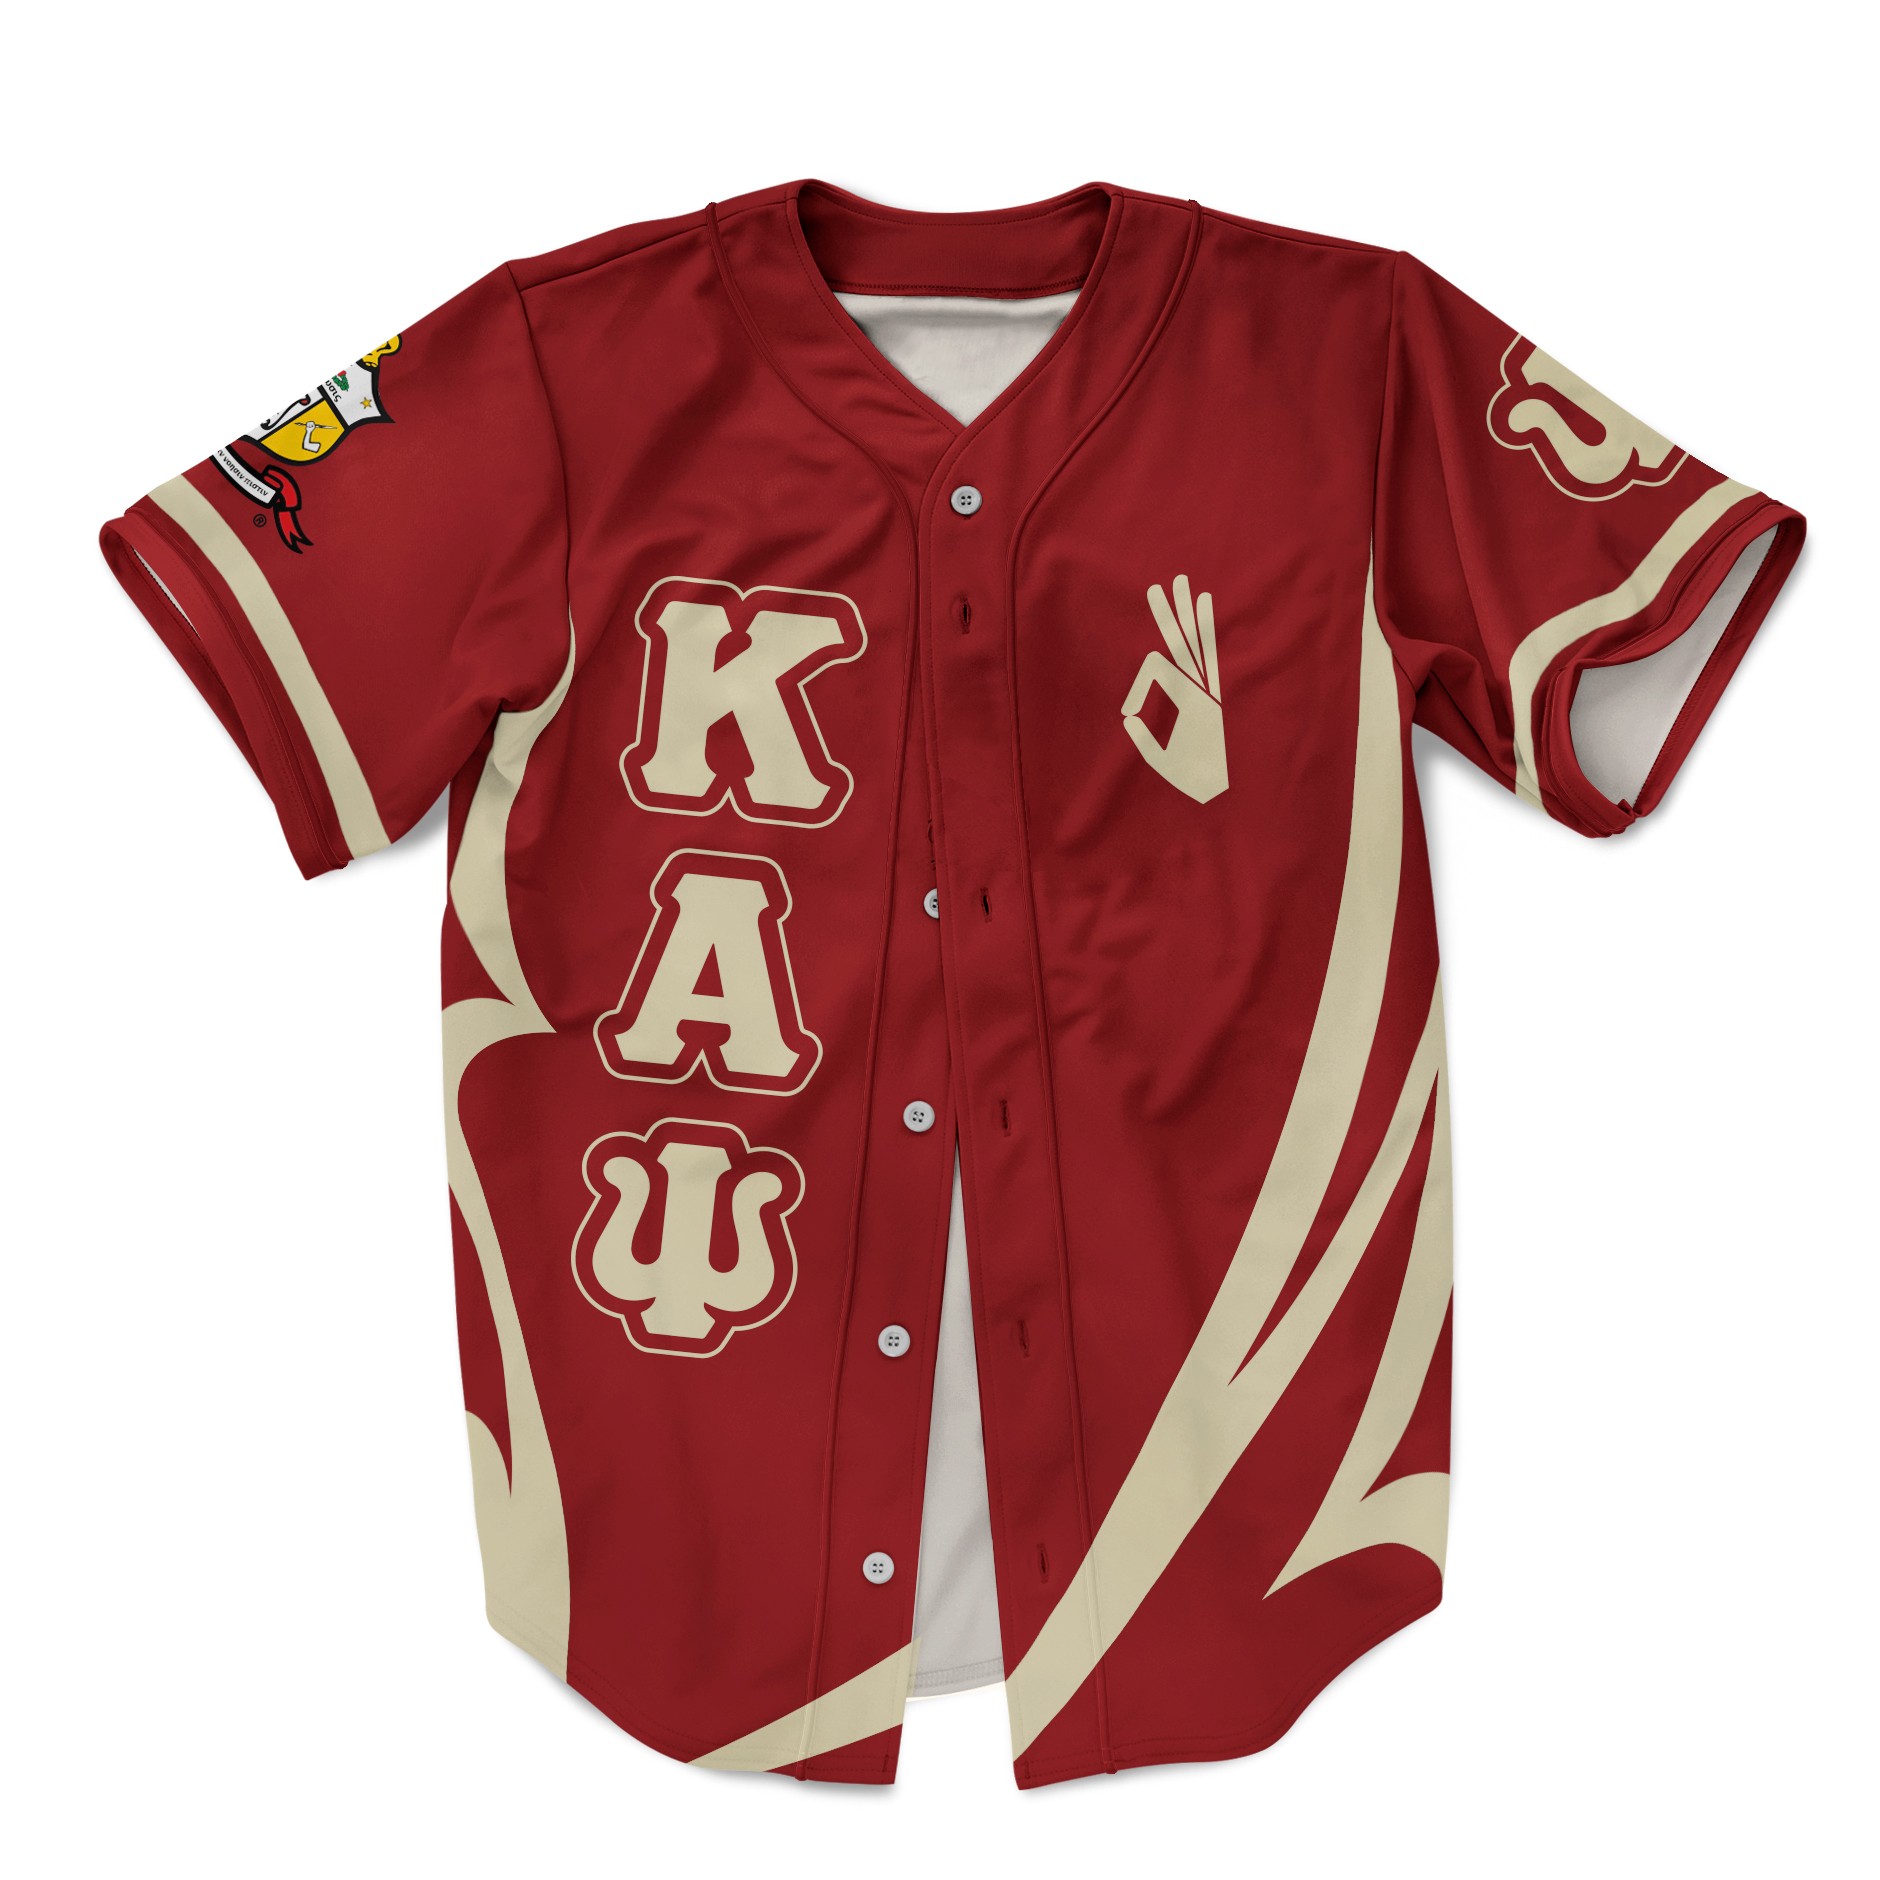 Kappa Kappa Psi - Baseball Jersey - The Upper Octave